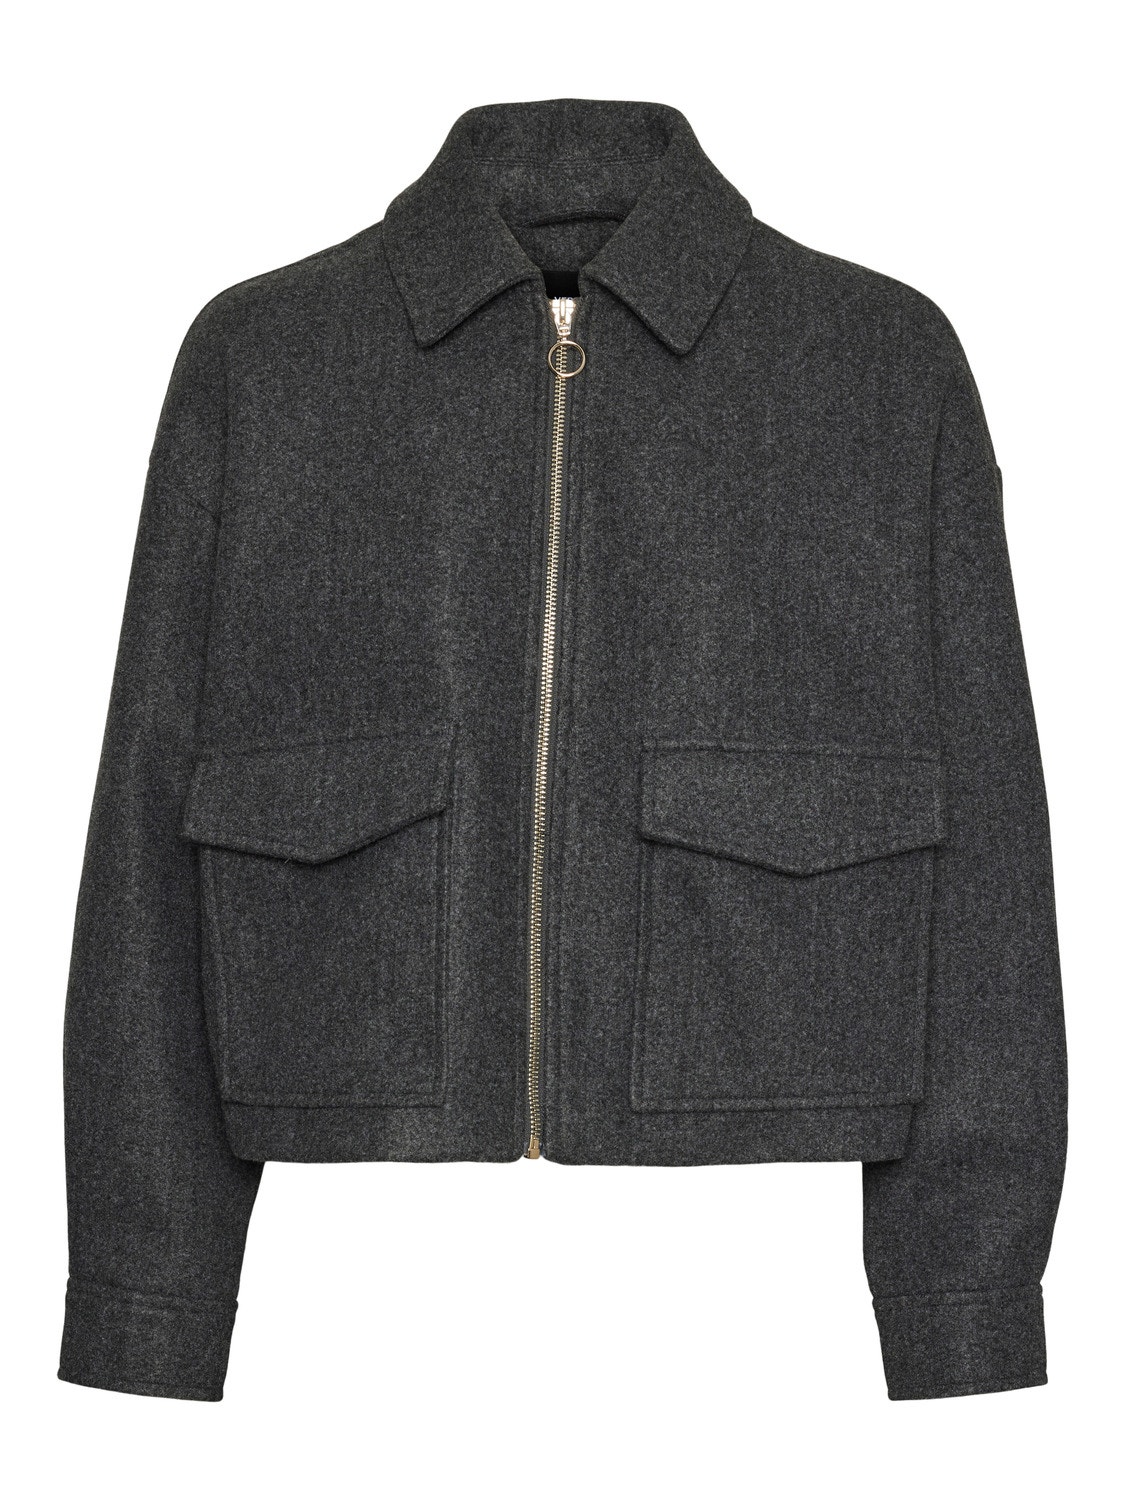 Vero Moda VMFORTUNE Jacket -Dark Grey Melange - 10310043